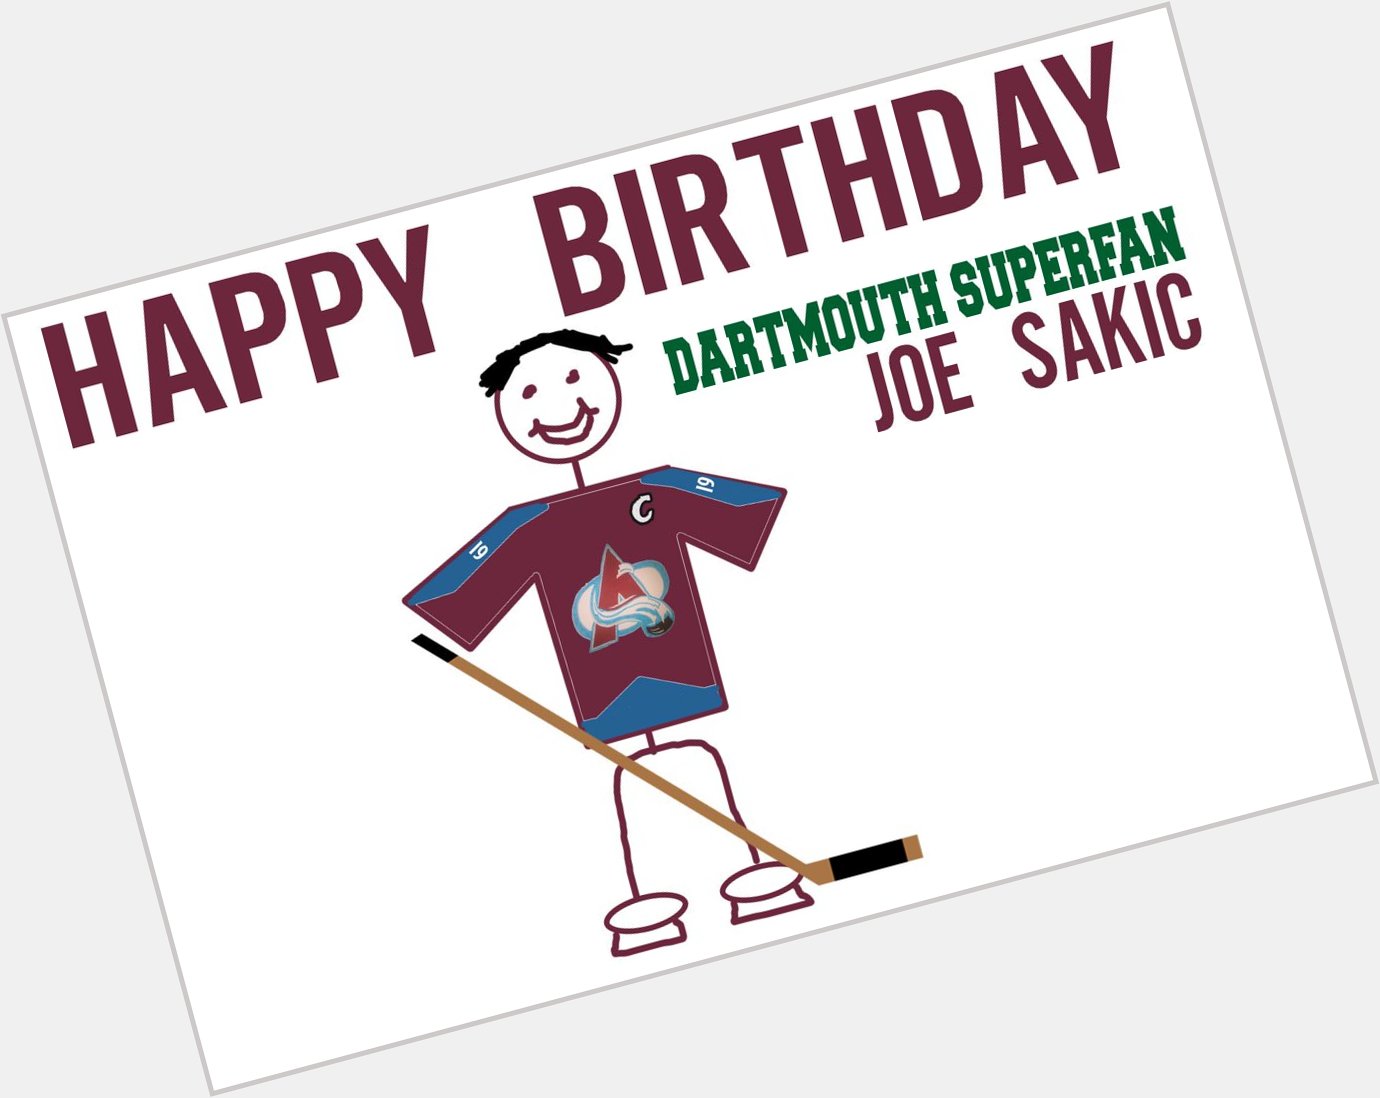 Happy Birthday to Joe Sakic, a staple of press boxes across the league! 